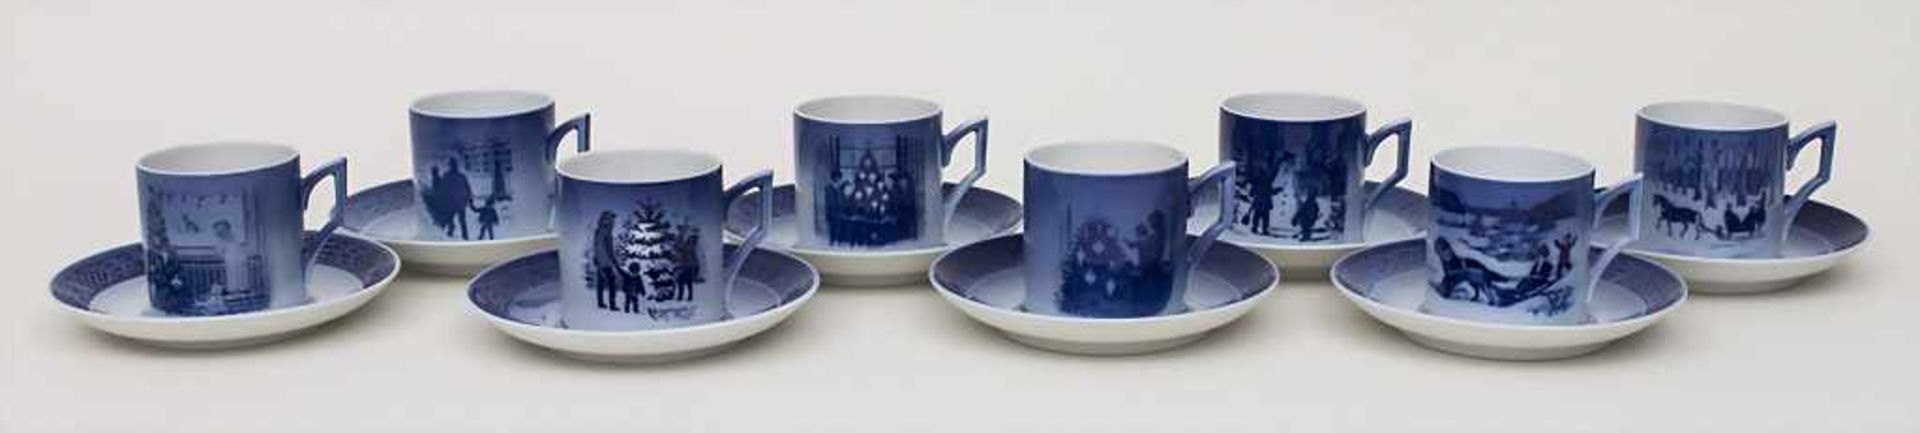 8 Weihnachtstassen mit Untertassen / 8 Christmas cups and saucers, Royal Copenhagen, 20. Jh., 1979-